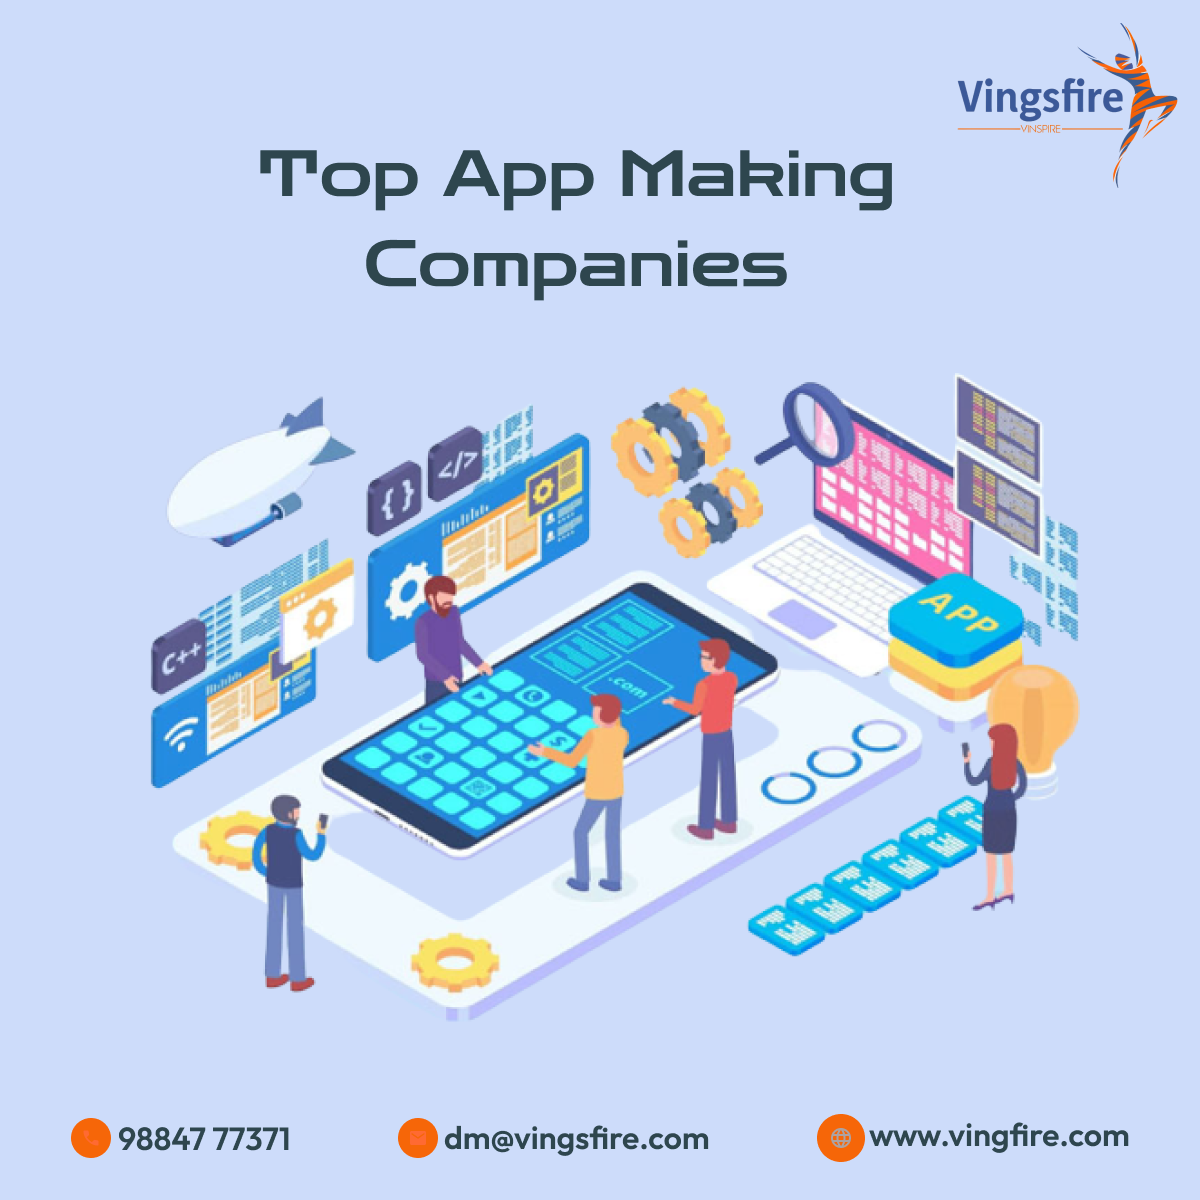 Top App Making Companies